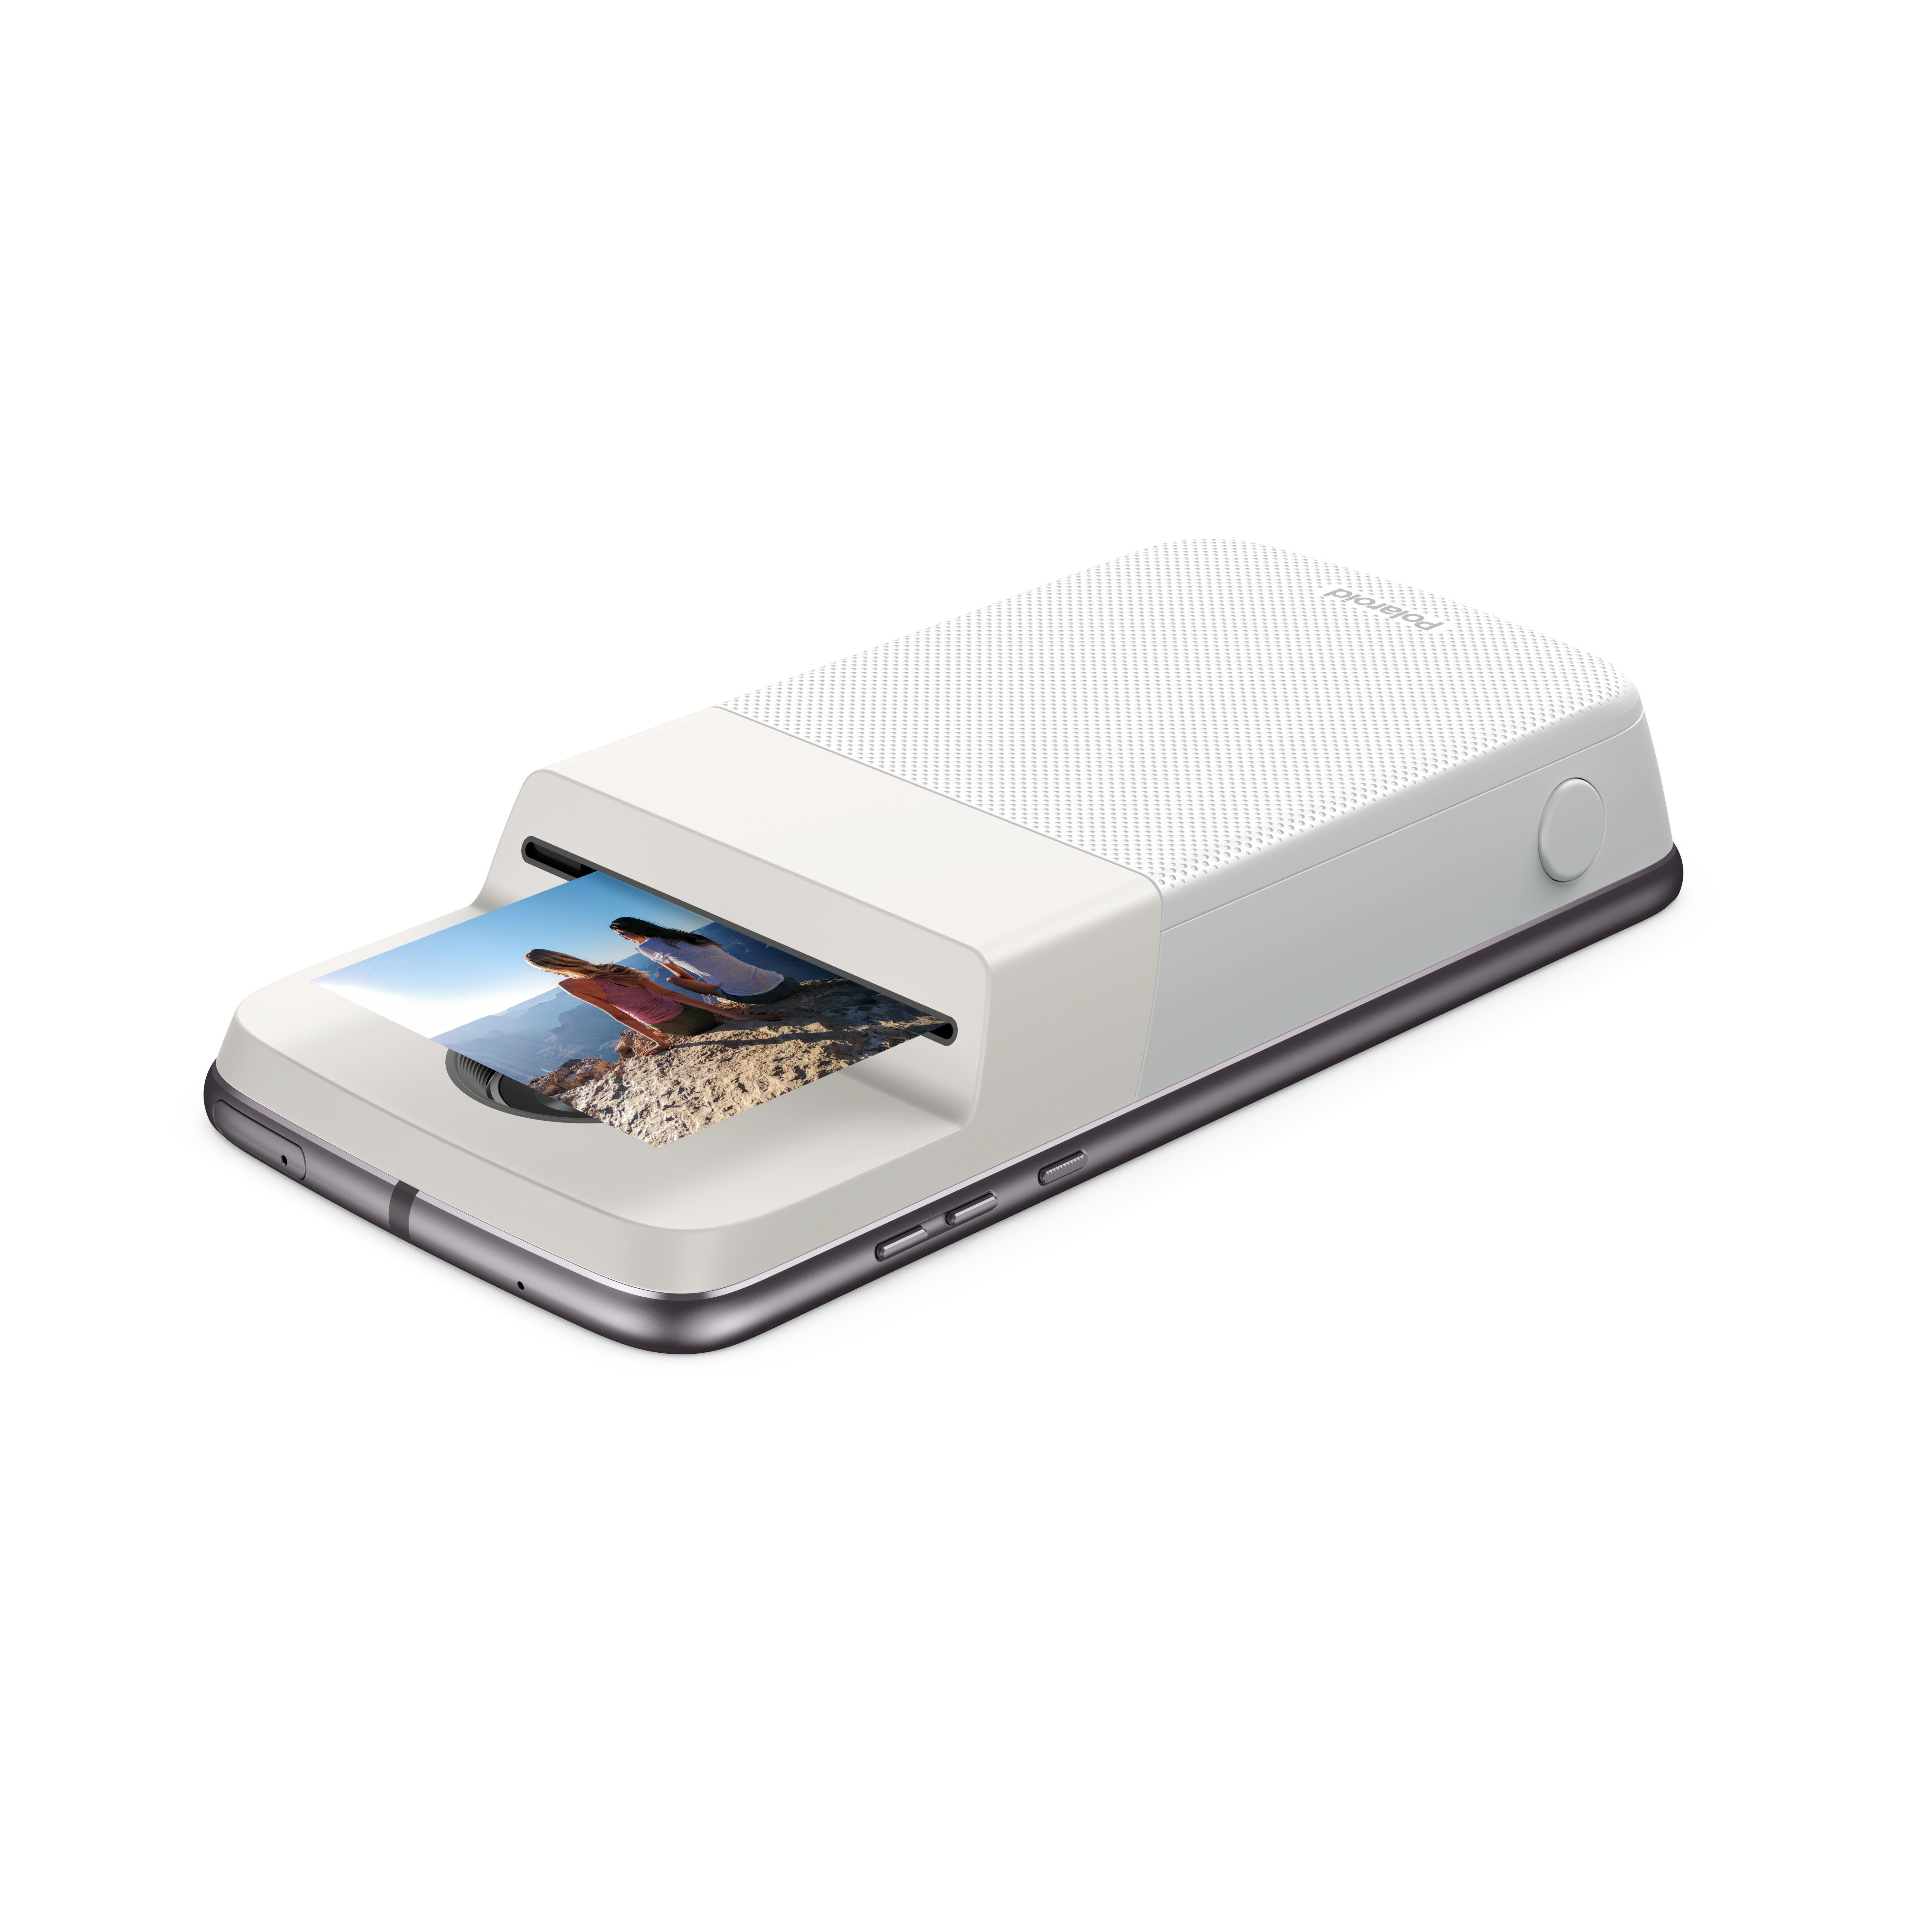 Tiskárna Polaroid Insta-Share tiskne fotografii 2 na 3